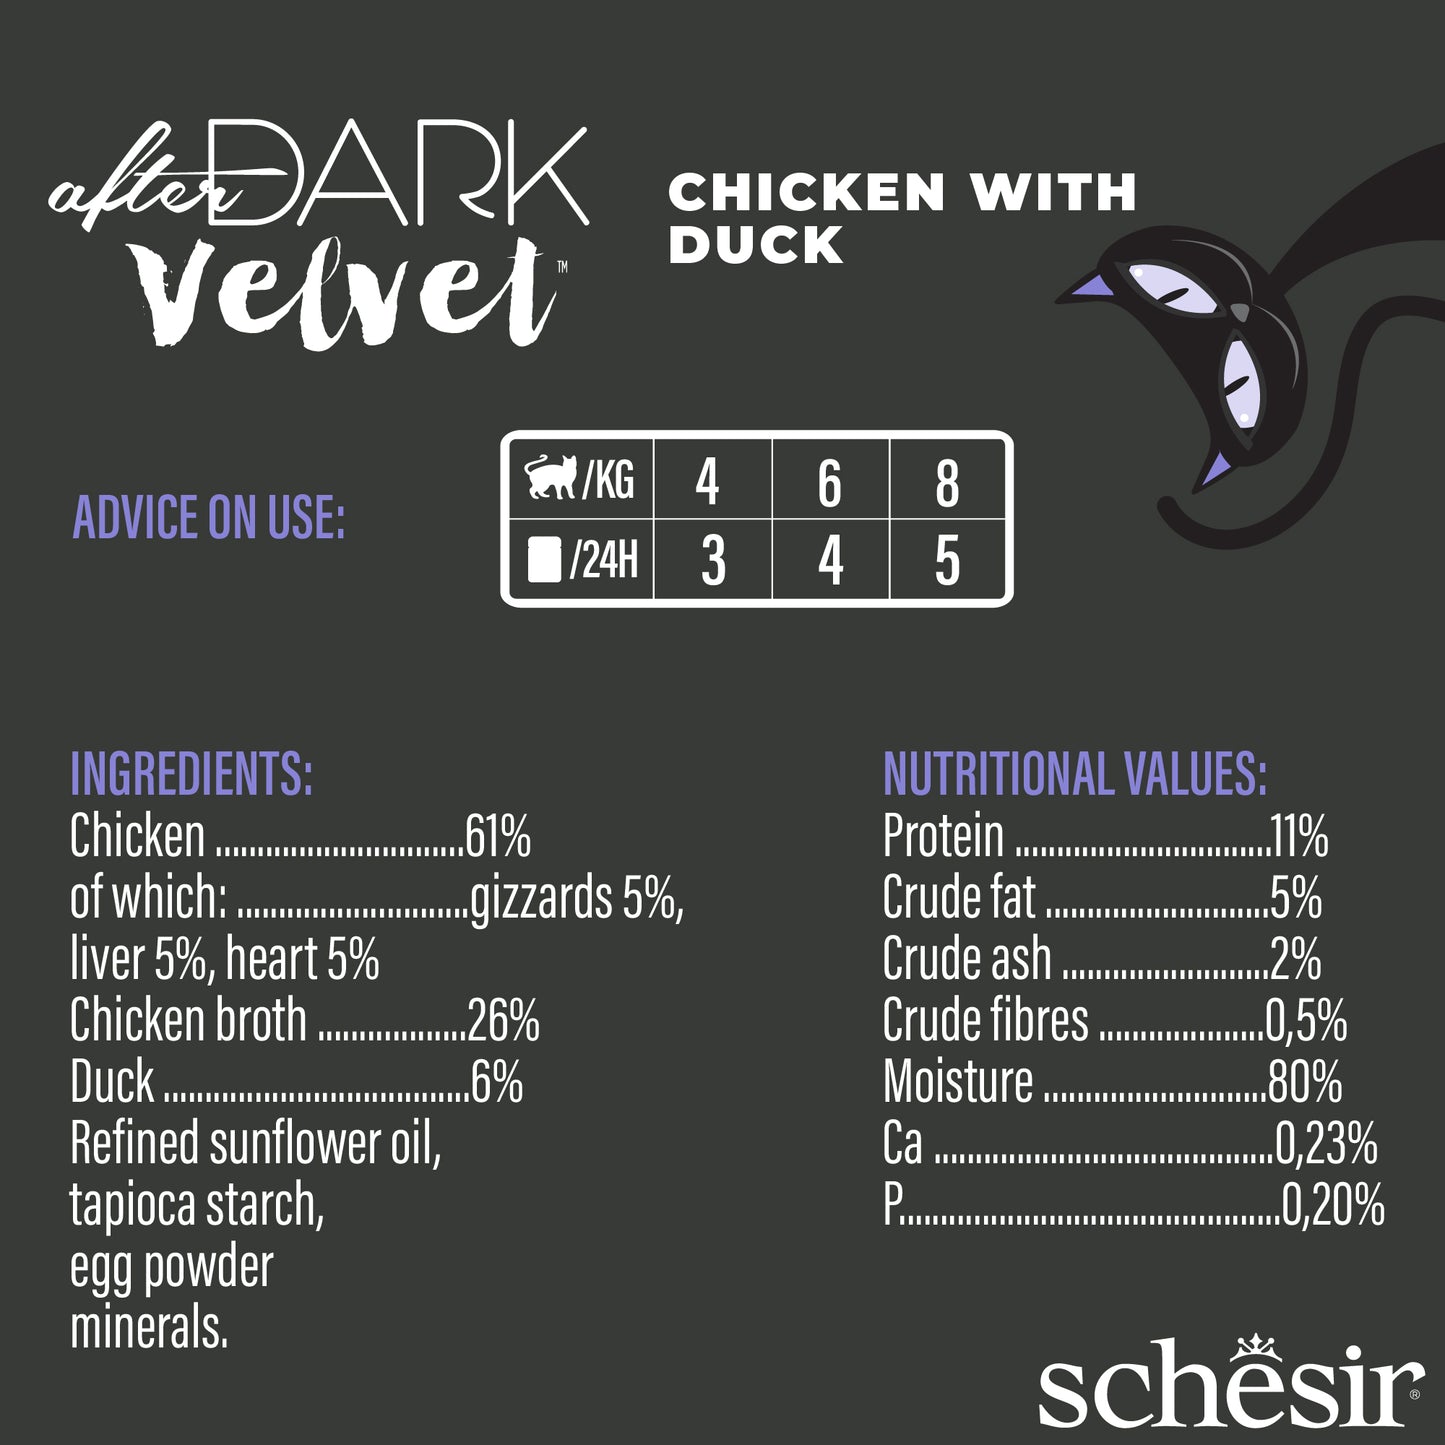 [5% OFF NNC Members] Schesir After Dark Velvet Mousse - Chicken with Duck, 80g